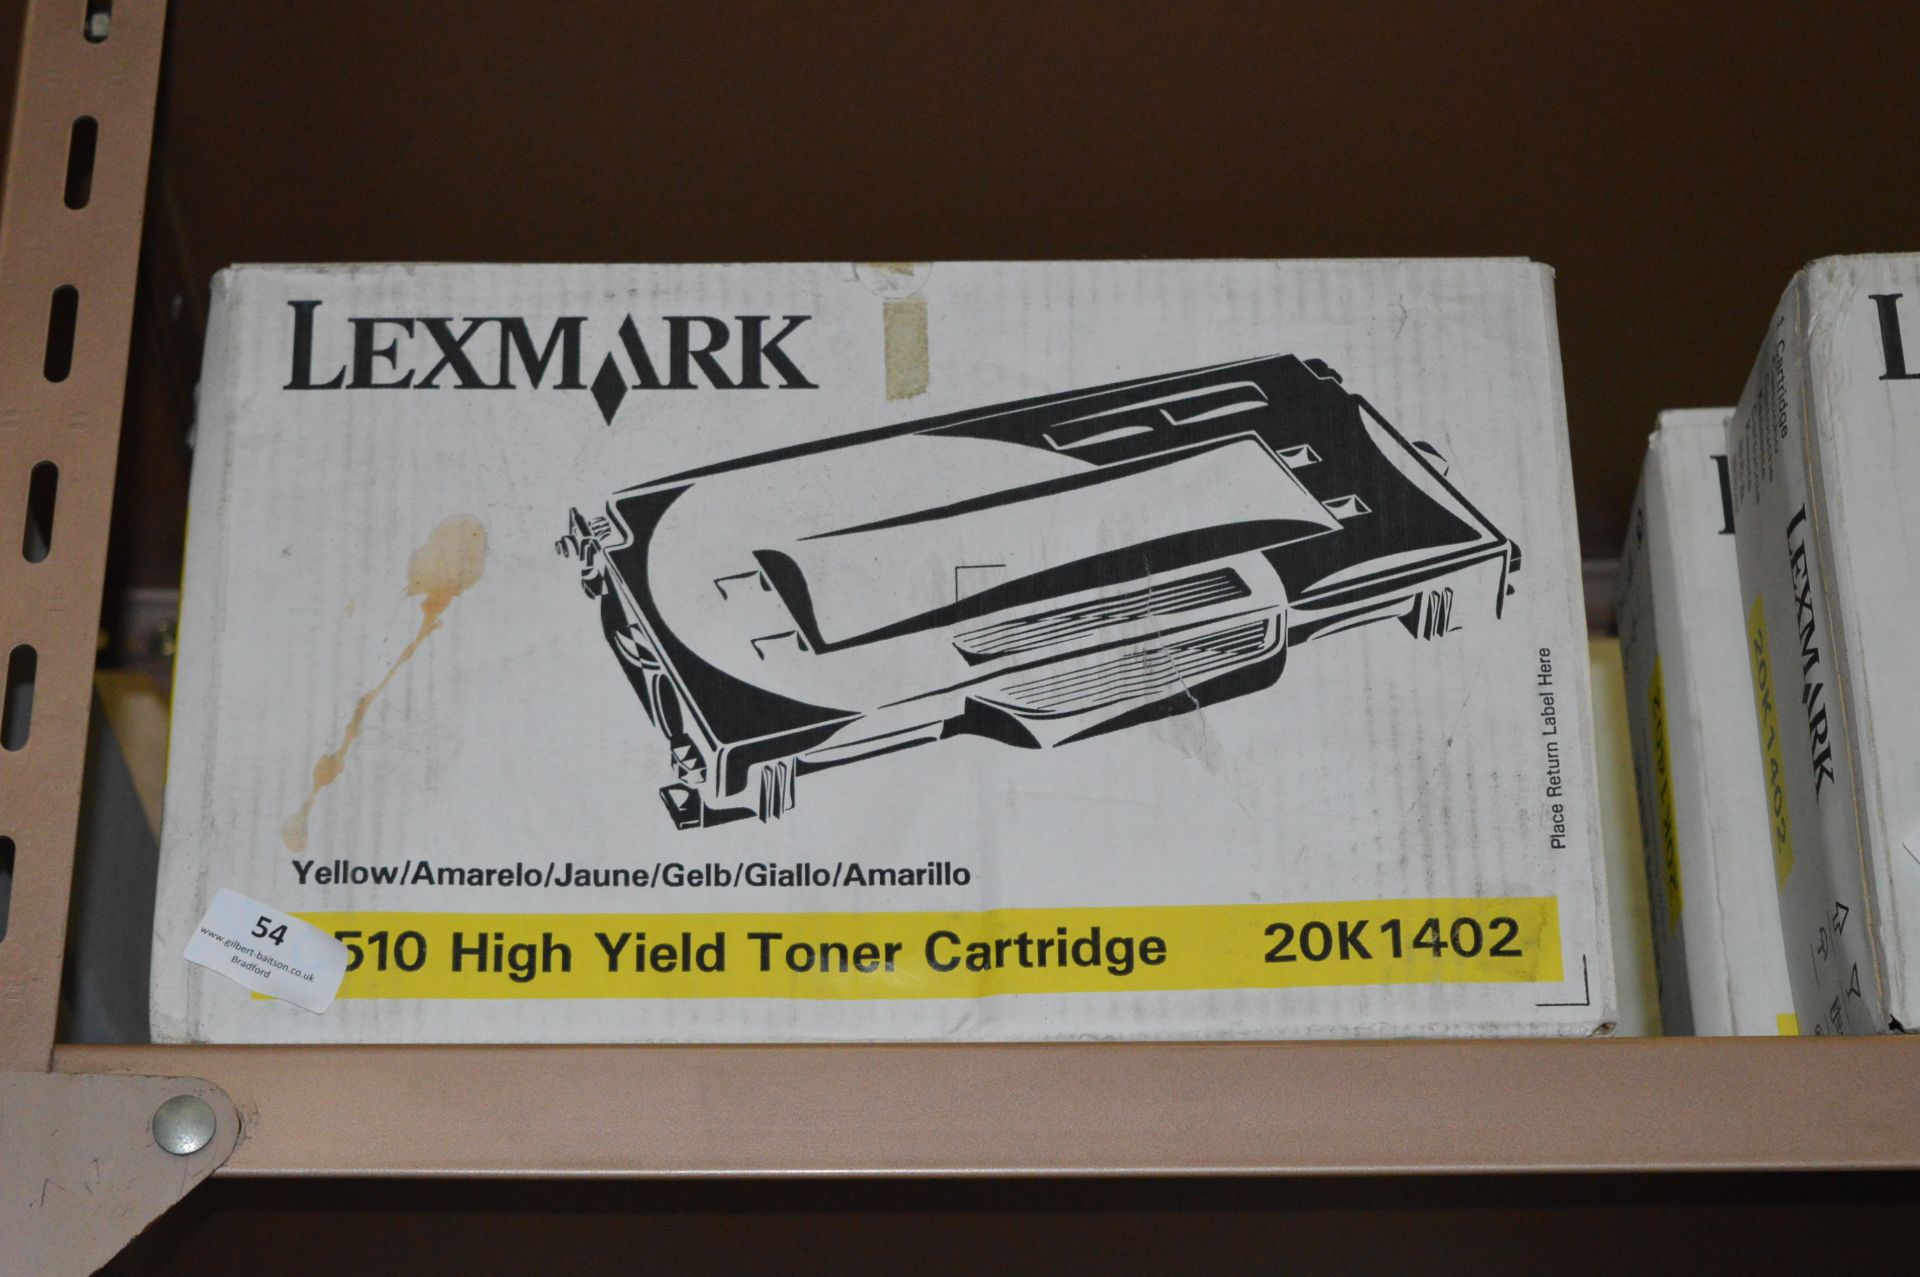 *Two Lexmark C510 Toner Cartridges